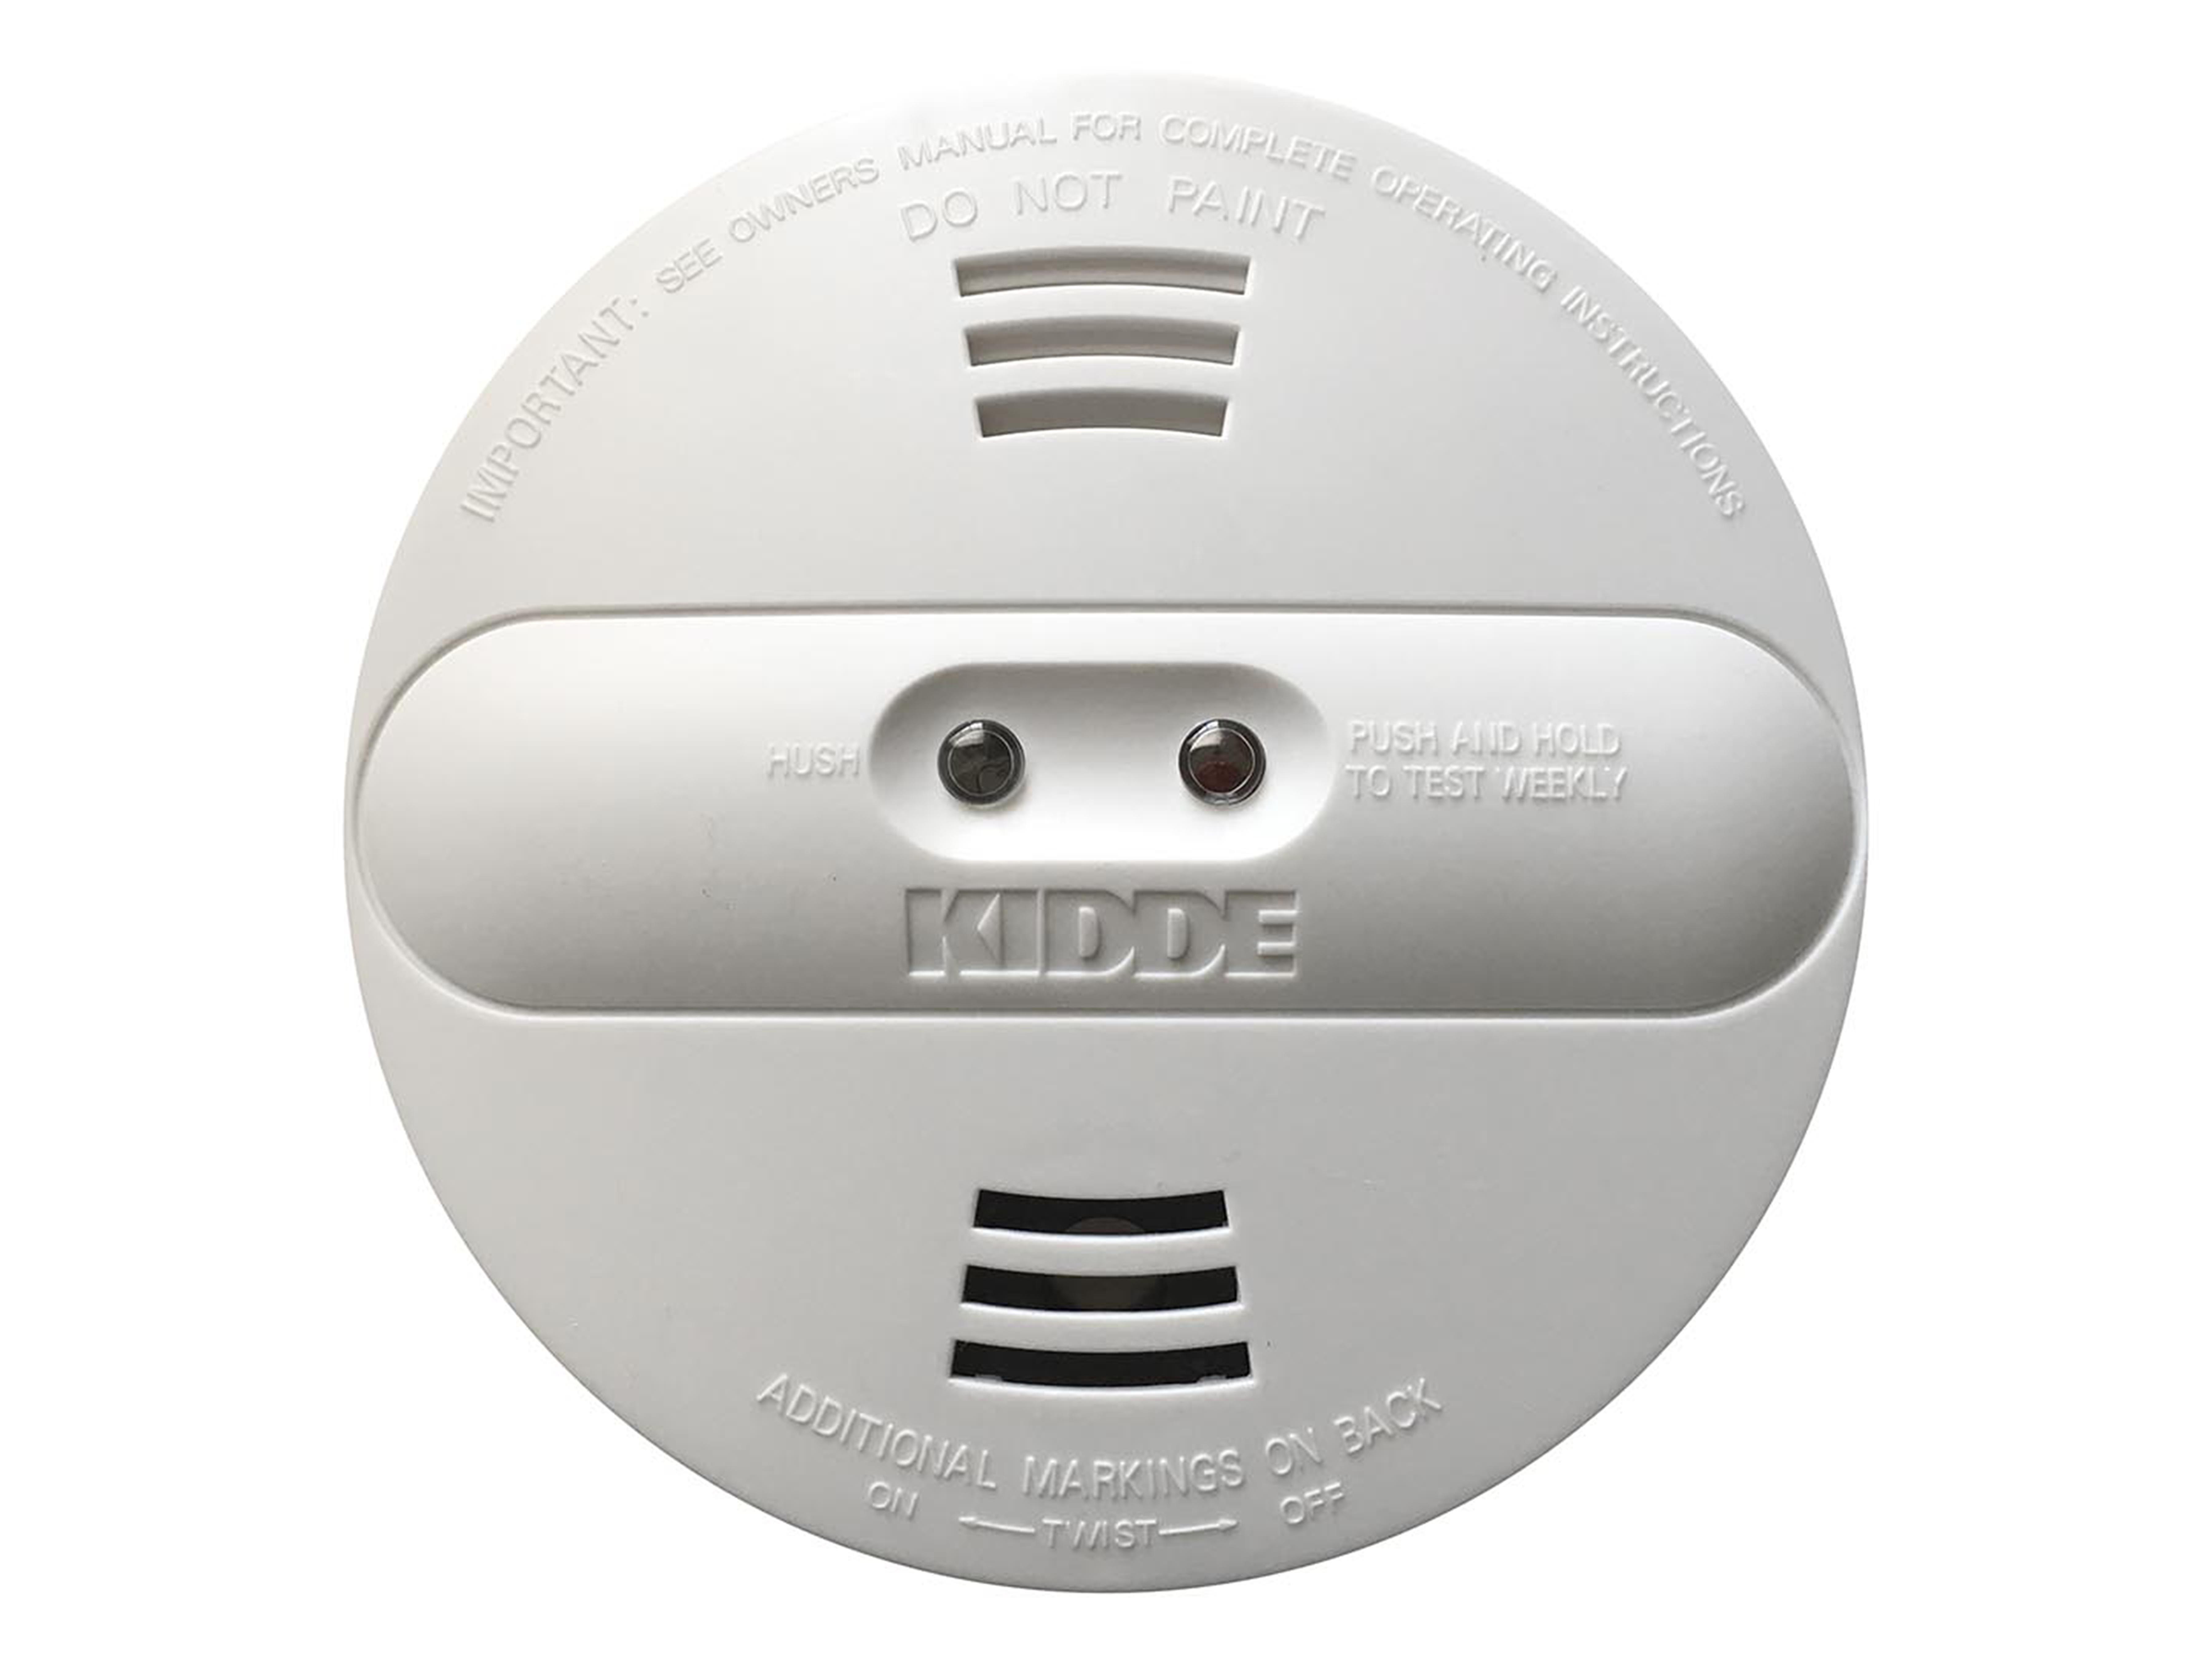 Kidde dual-sensor (photoelectric and ionization) smoke alarms - models PI2010 and PI9010